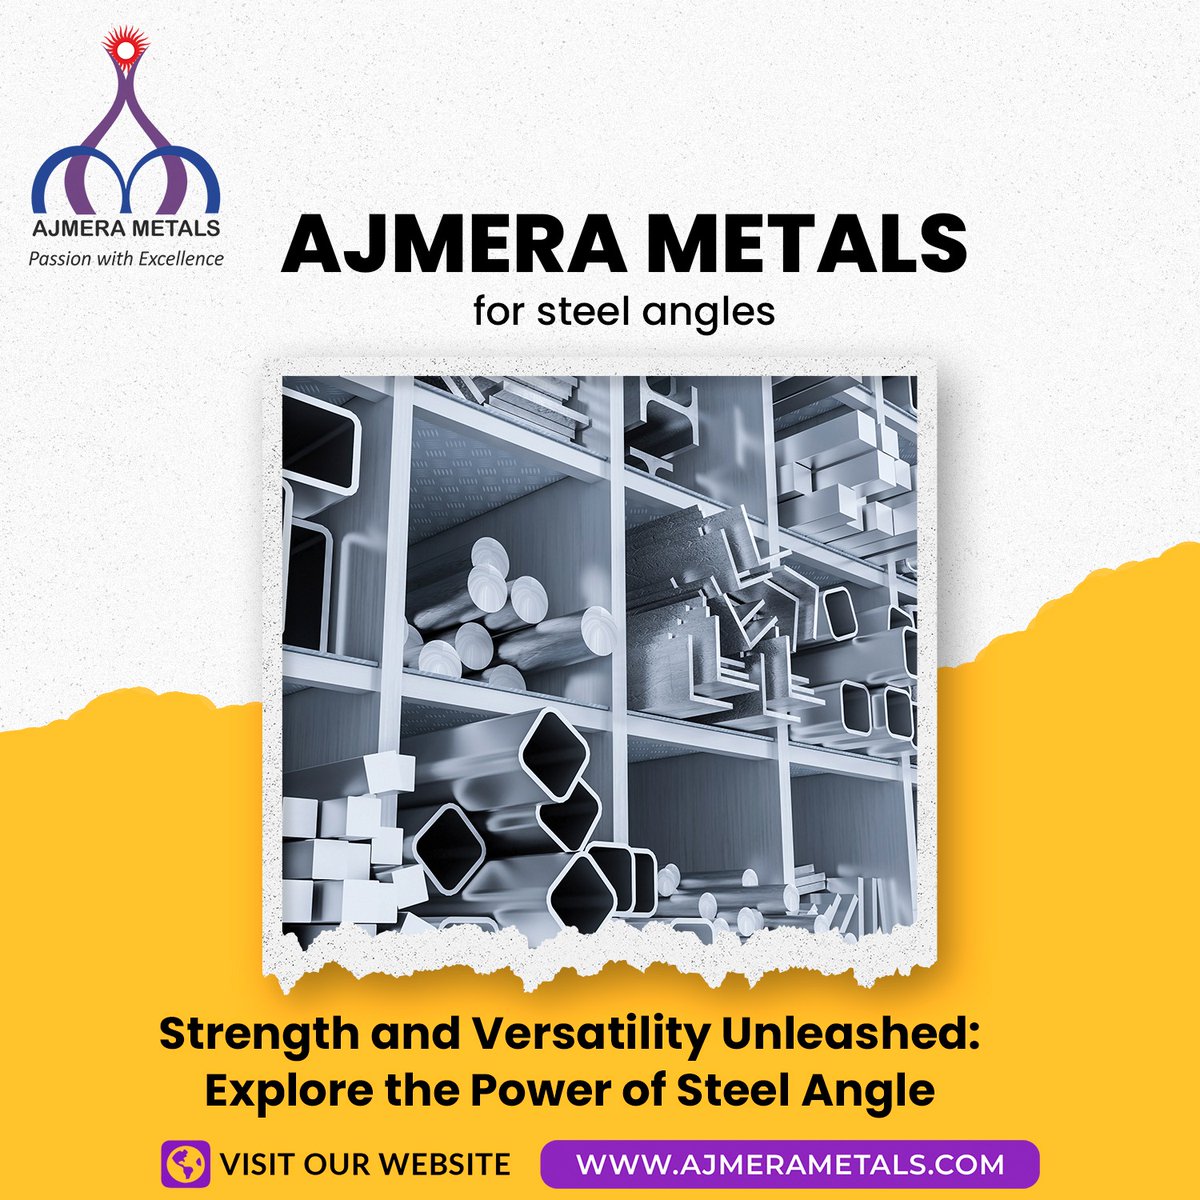 Strength and Versatility Unleashed: Explore the Power of Steel Angle
.
Visit: ajmerametals.com
.
#MetalsSupplier #Elevatoesections #IndustrialMetals #MetalProducts #ajmerametals #MetalSourcing #MetalInventory #MetalStockist #SteelSupplier #AluminumSupplier